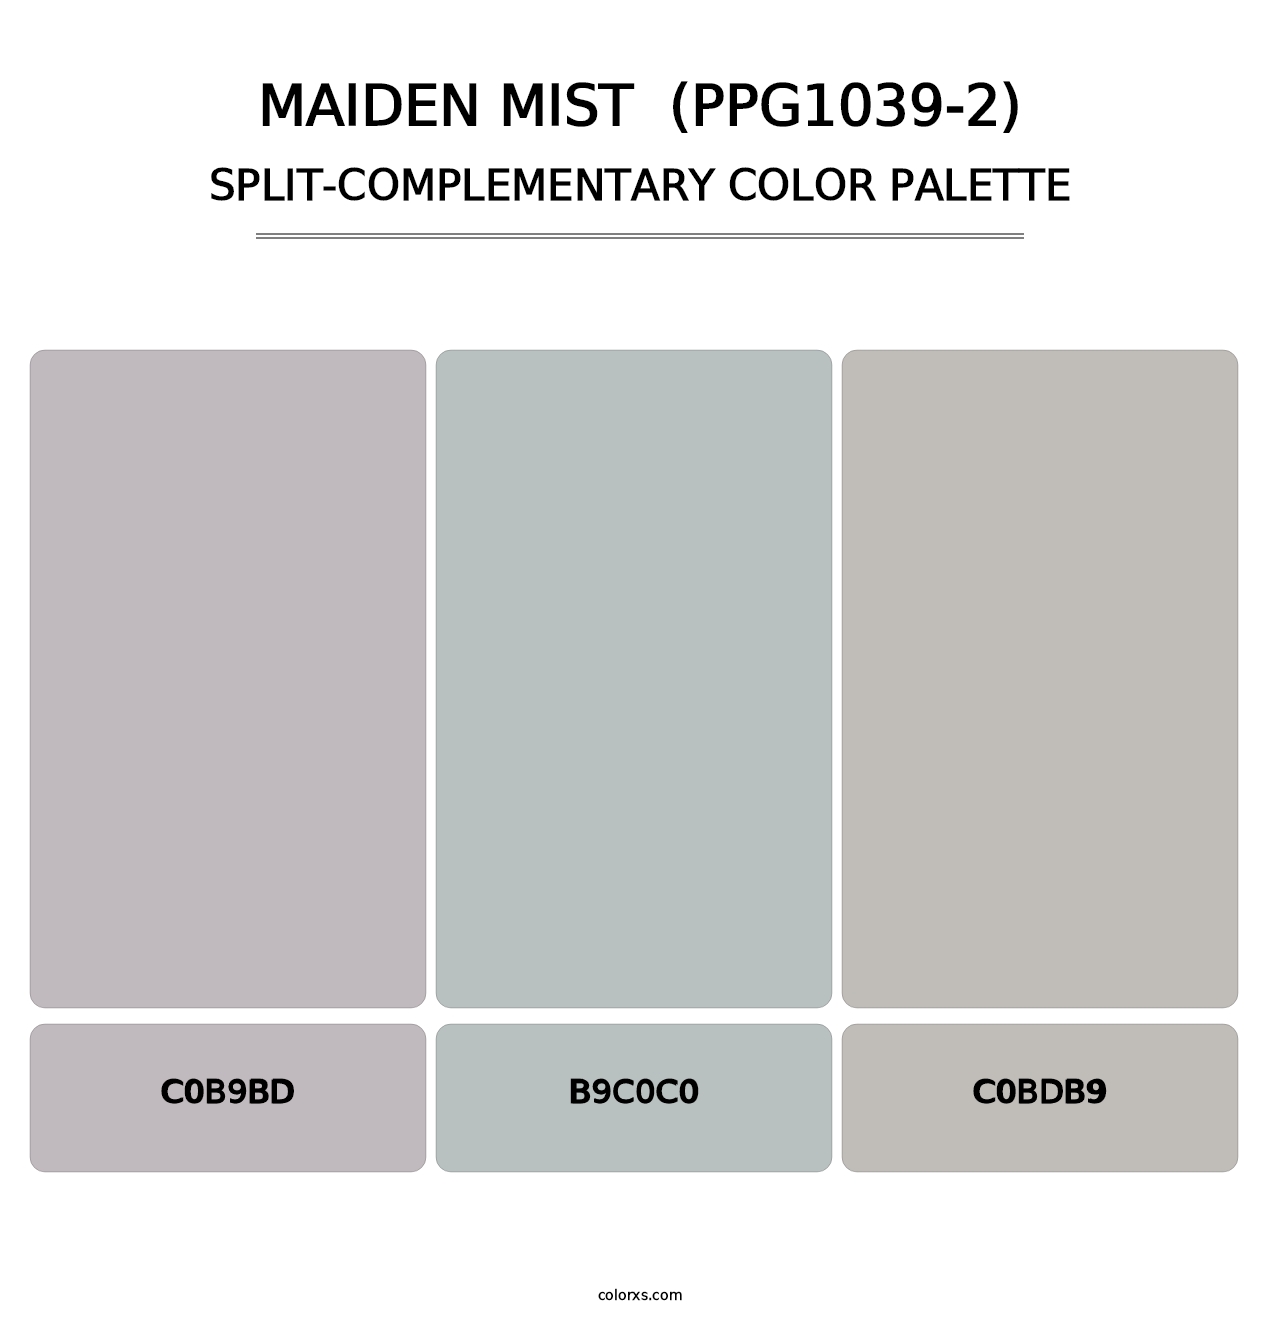 Maiden Mist  (PPG1039-2) - Split-Complementary Color Palette